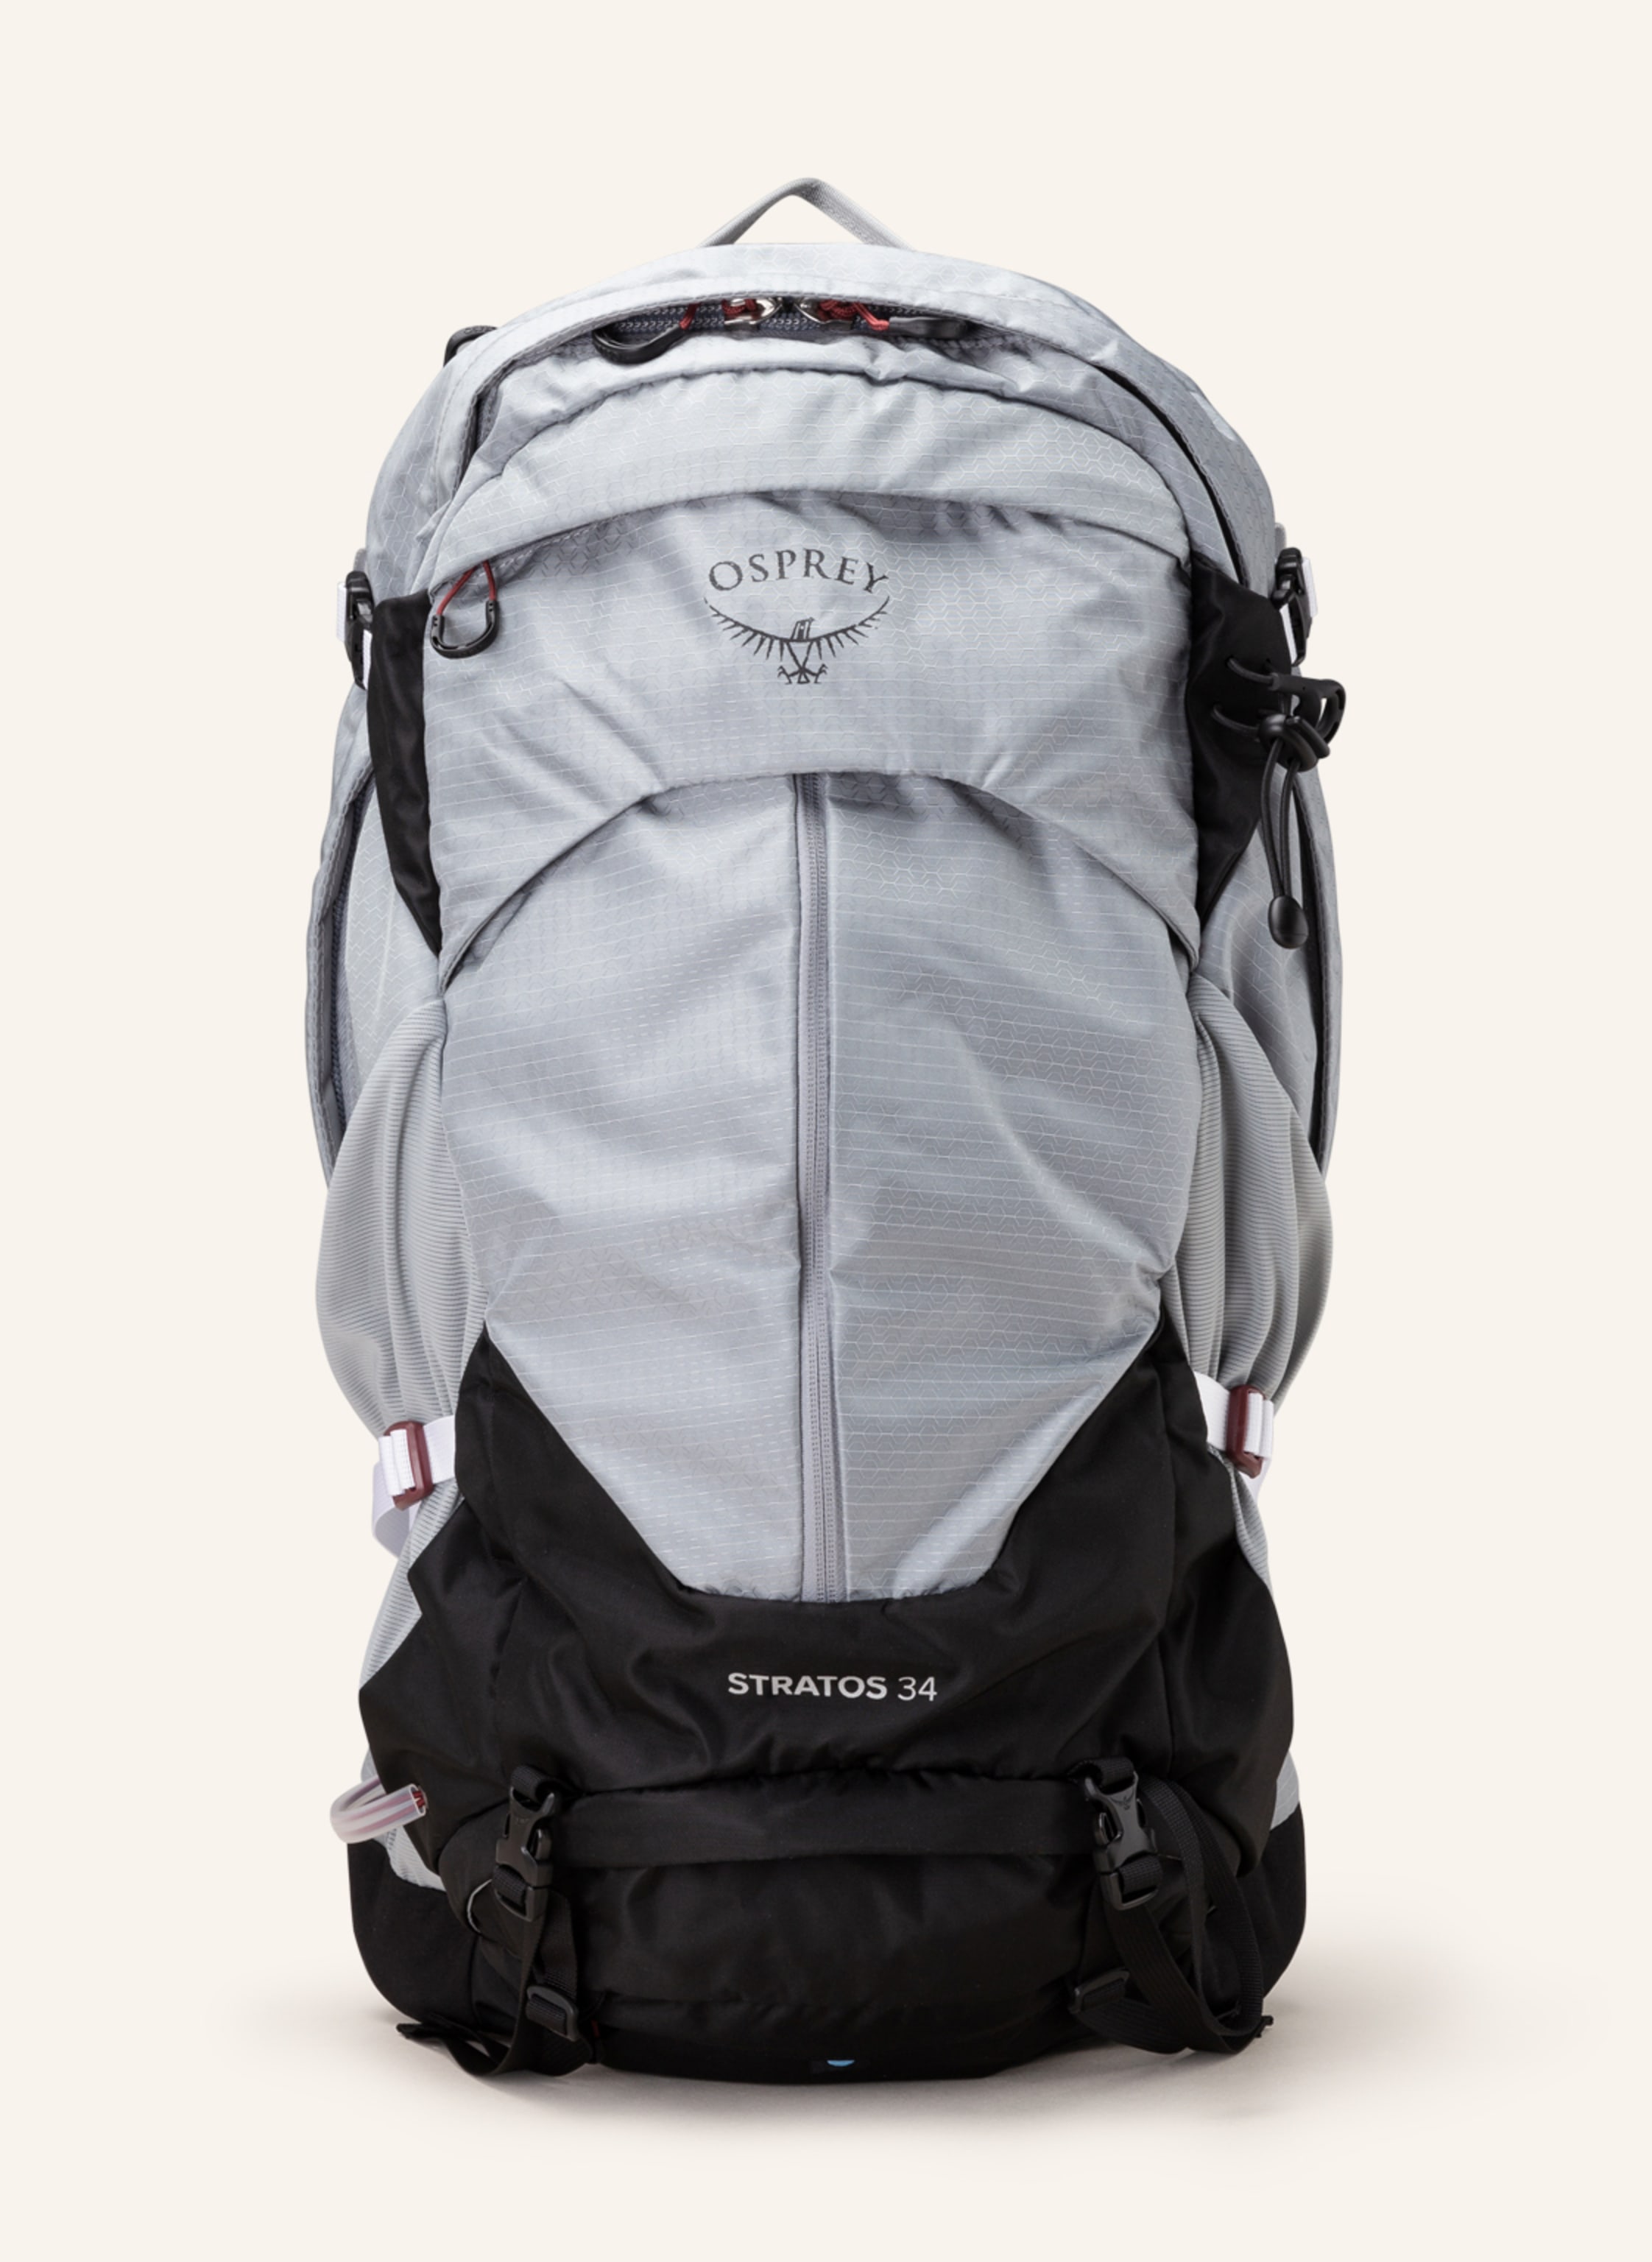 Legit check an Osprey bag (Farpoint Trek 55) : r/CampingGear